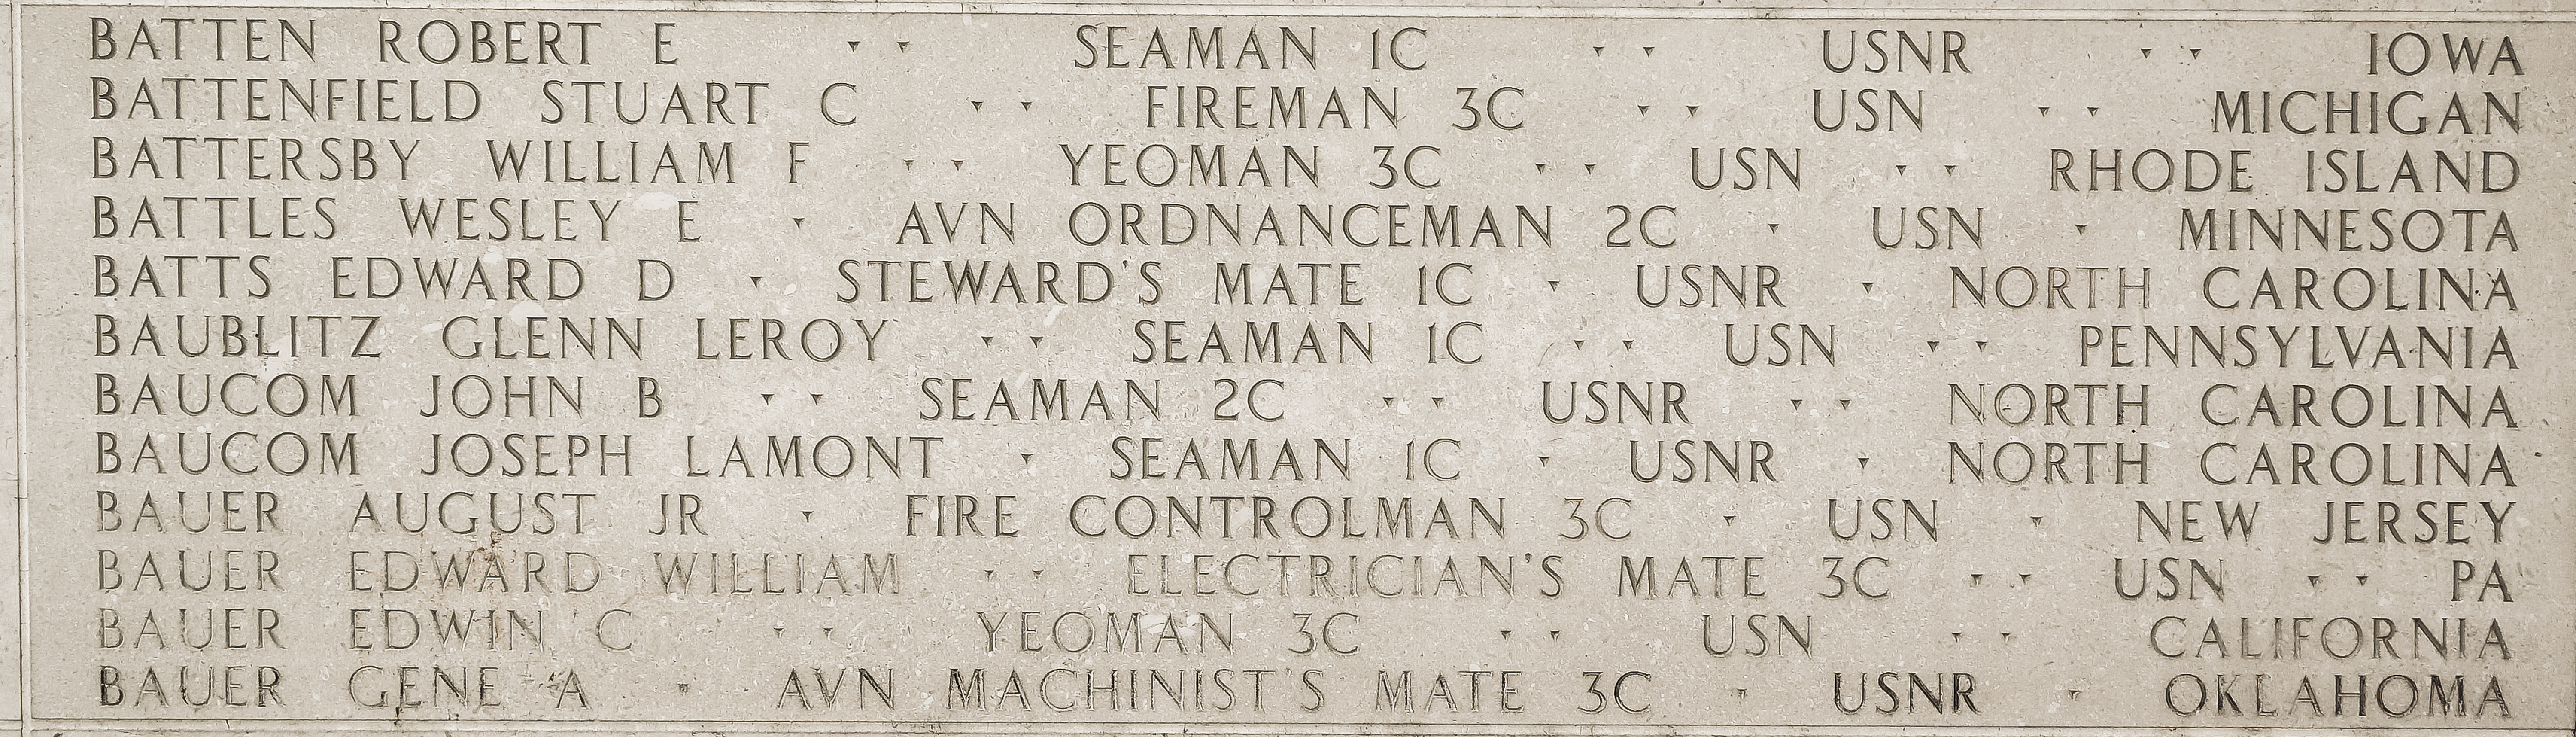 Edwin C. Bauer, Yeoman Third Class